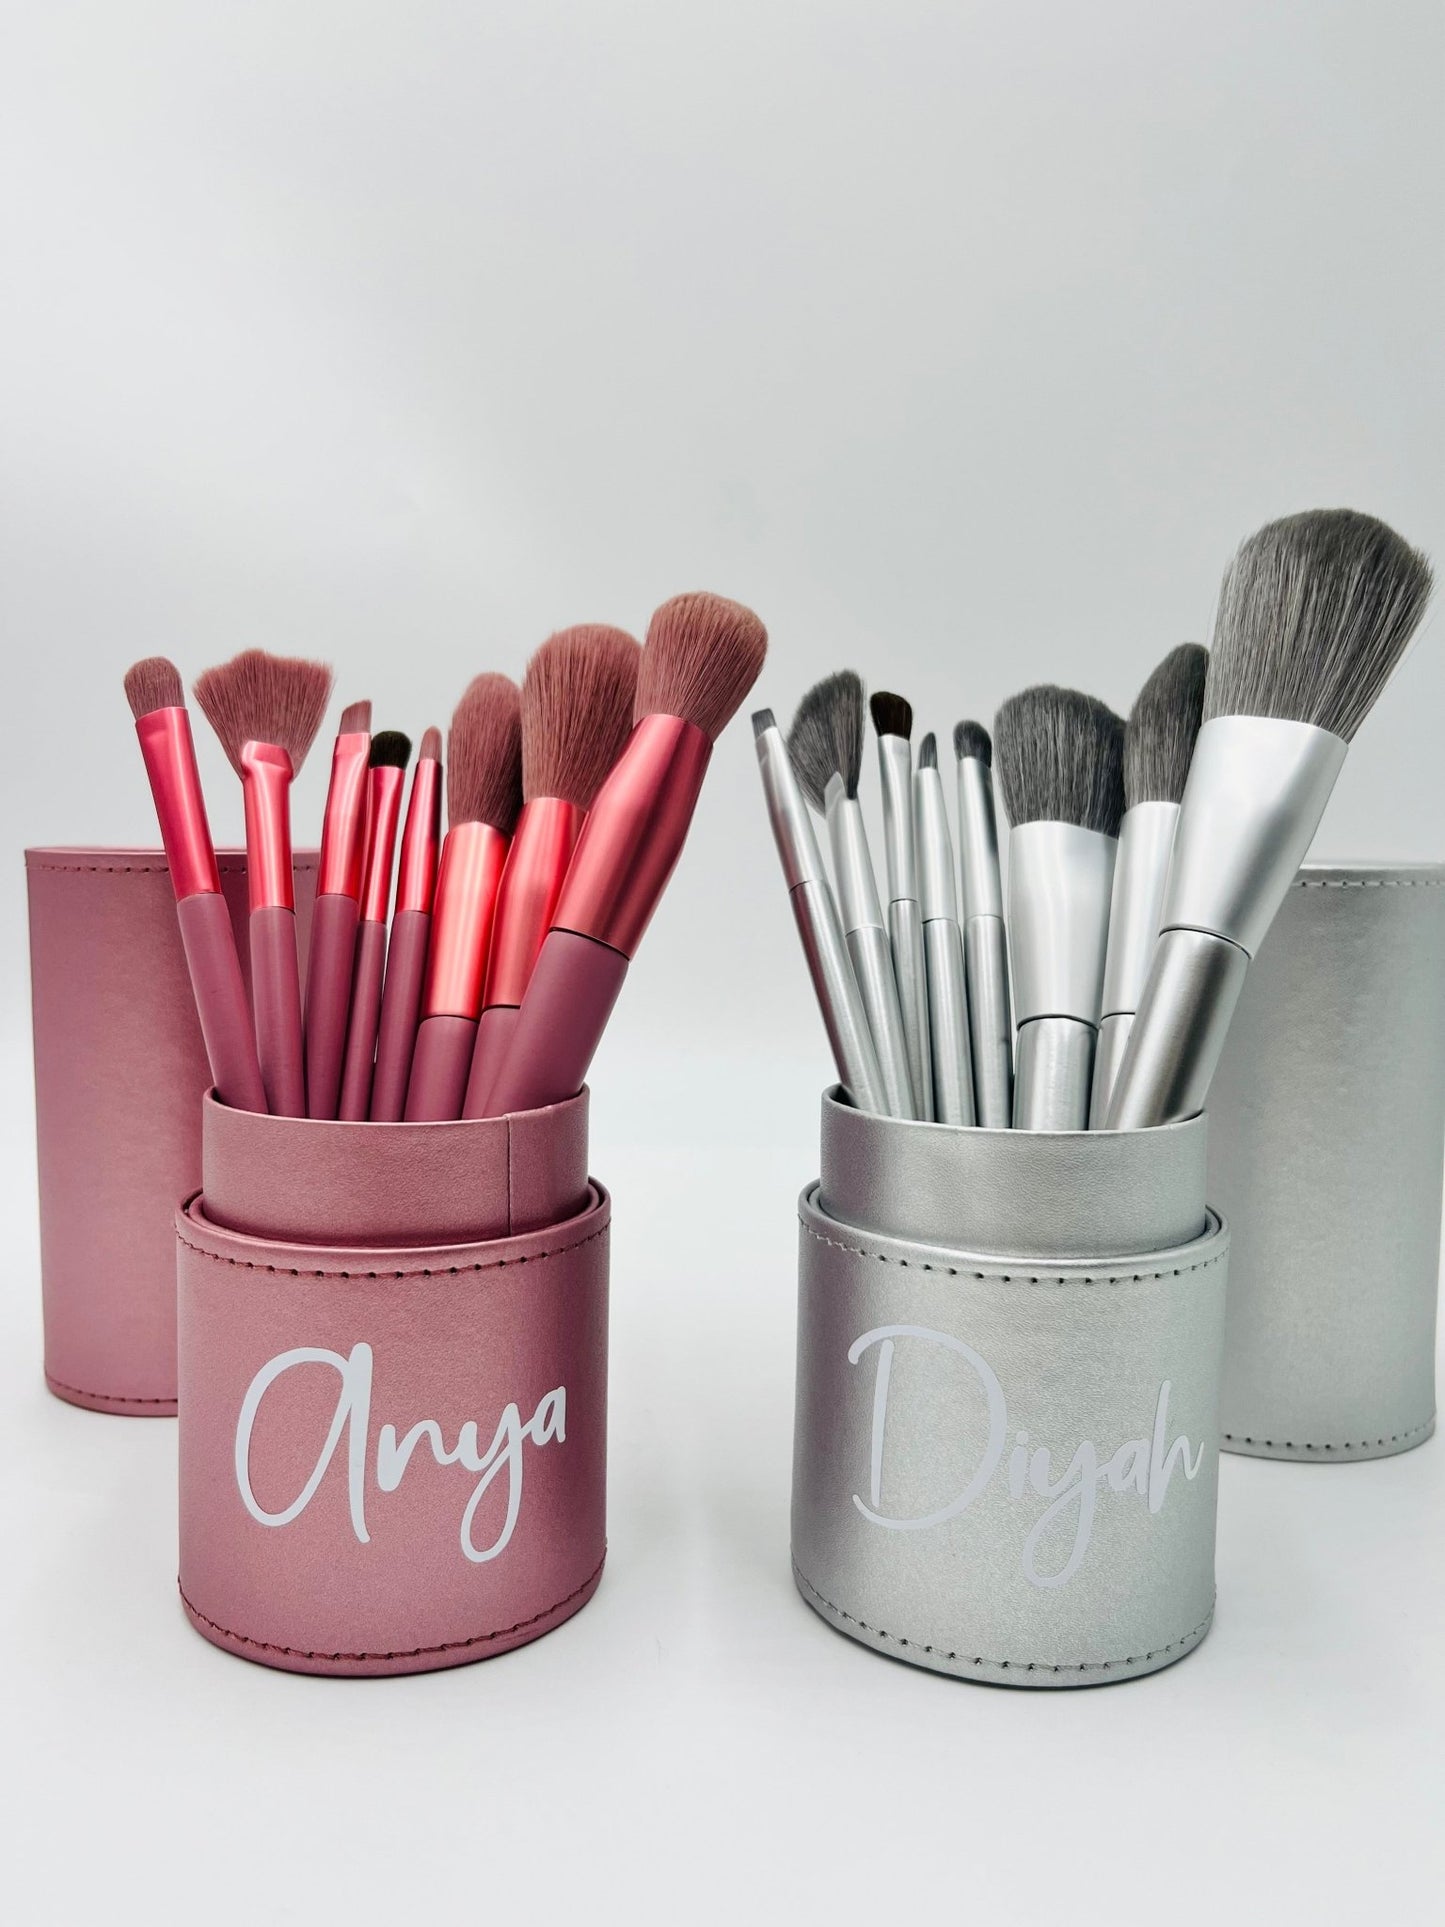 Personalised make up brush sets